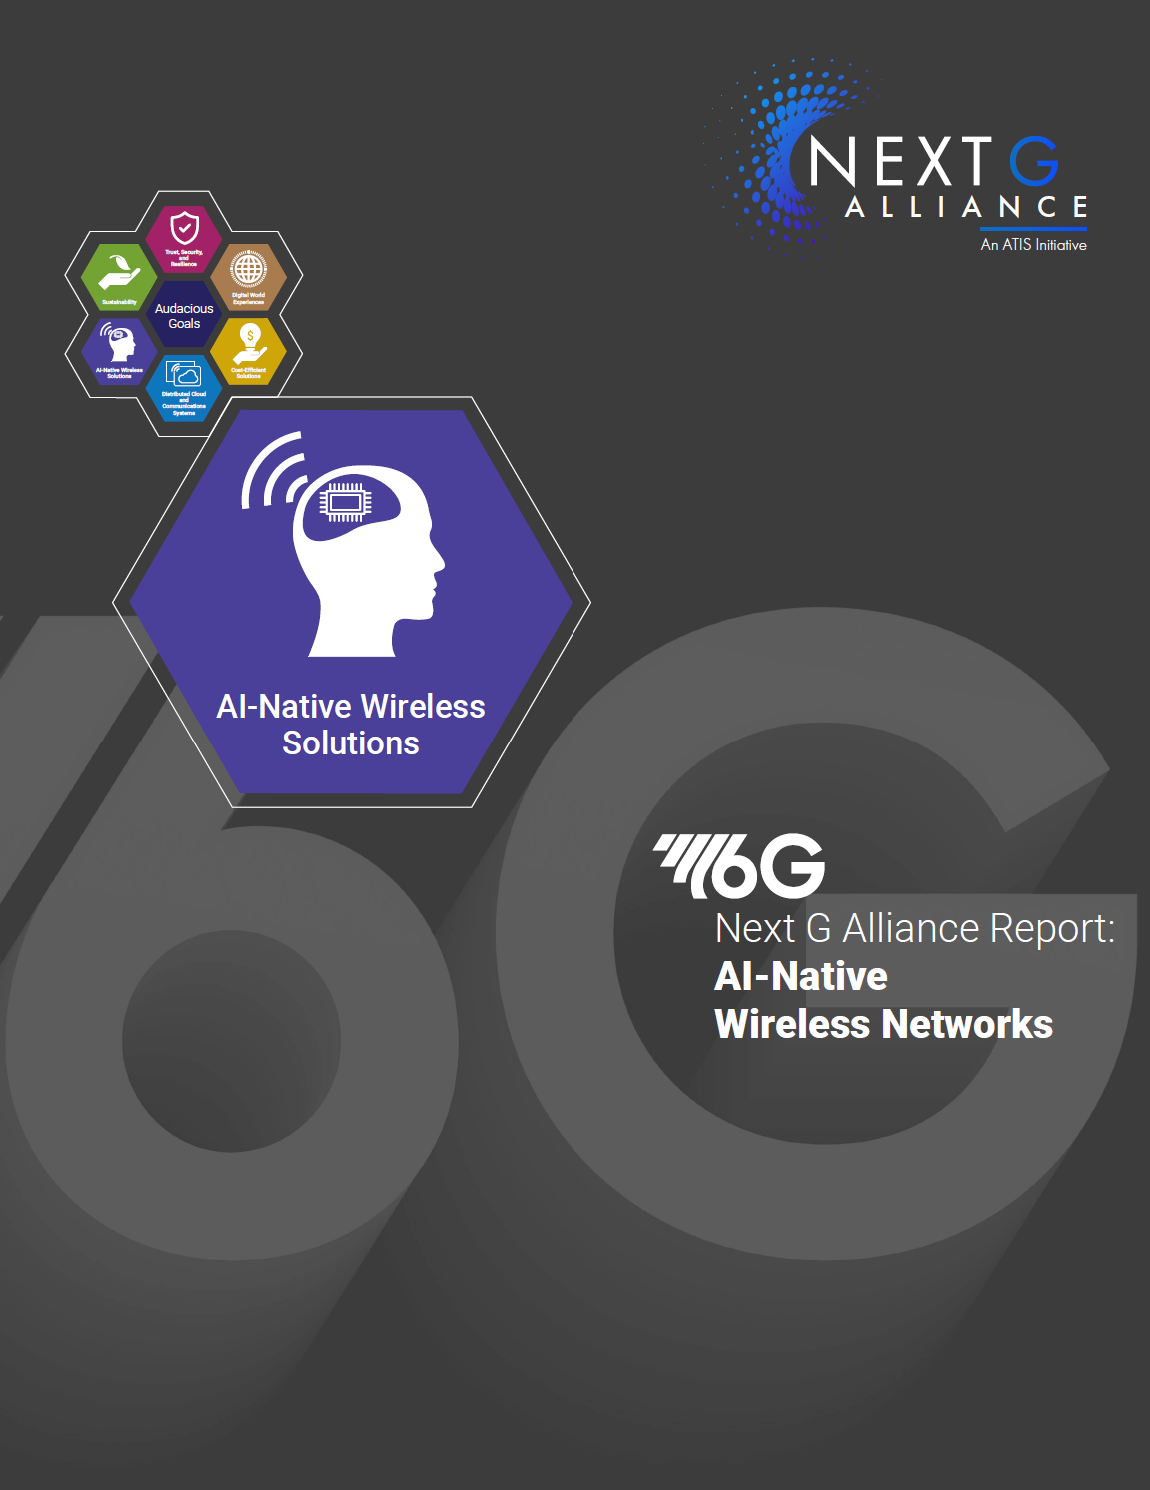 Next G Alliance Report "Next G Alliance Report: Al-Native Wireless Networks"